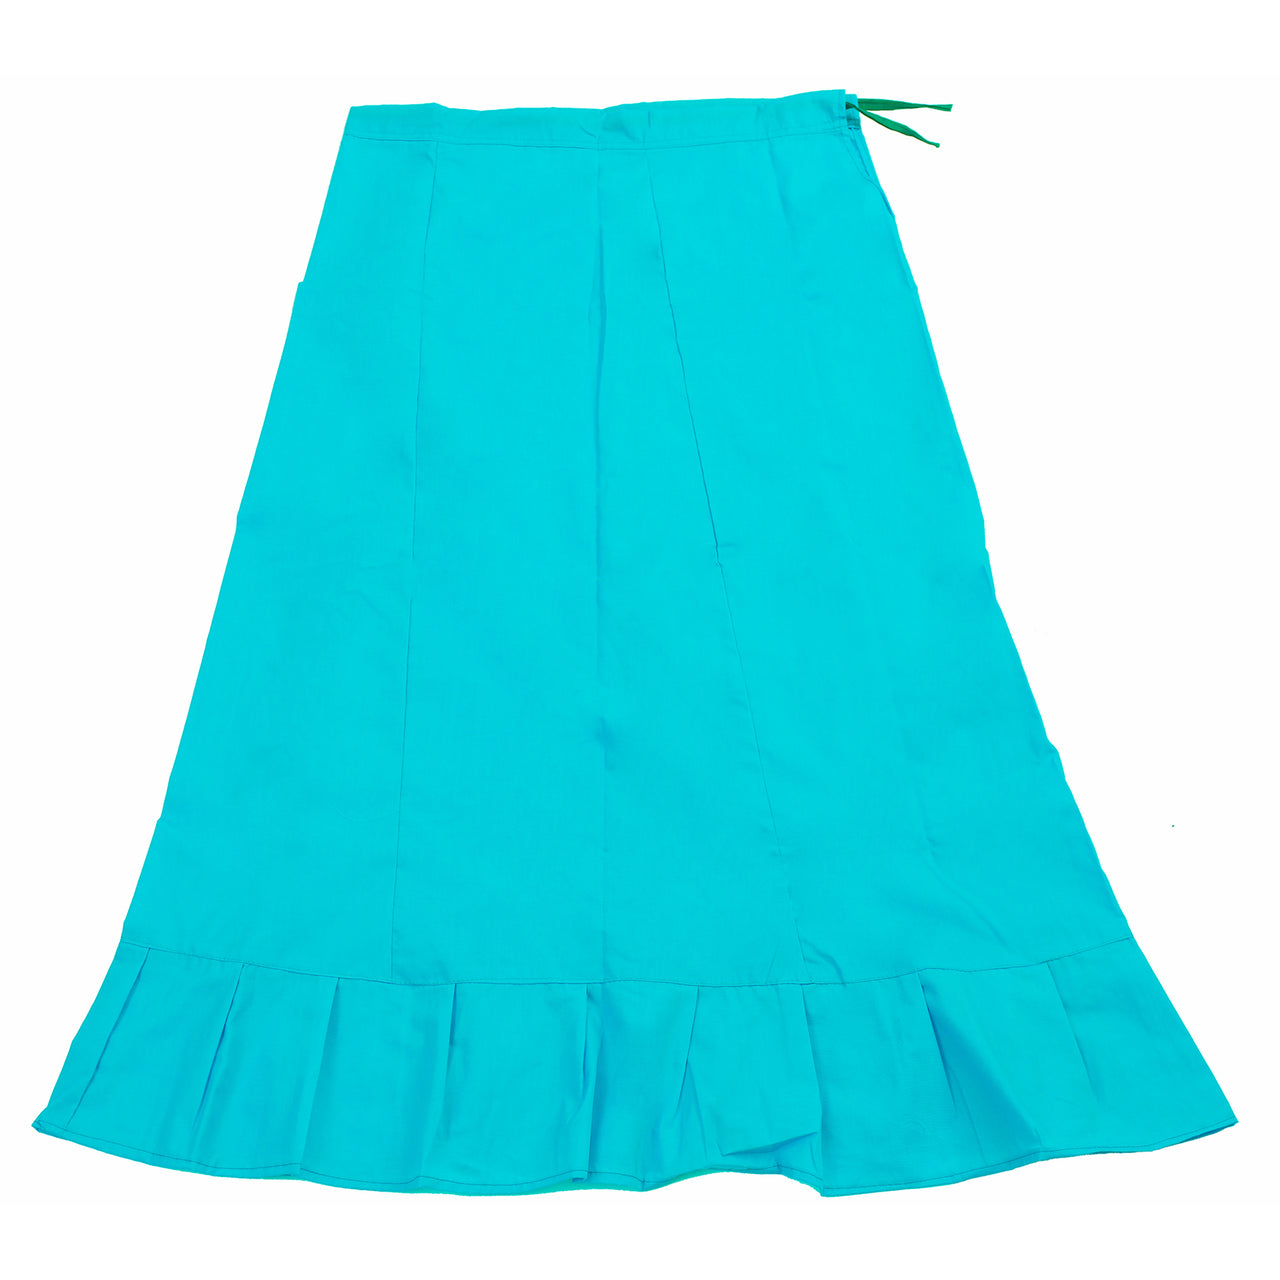 Turquoise - Sari (Saree) Petticoat - Available in S, M, L & XL - Underskirts For Sari's